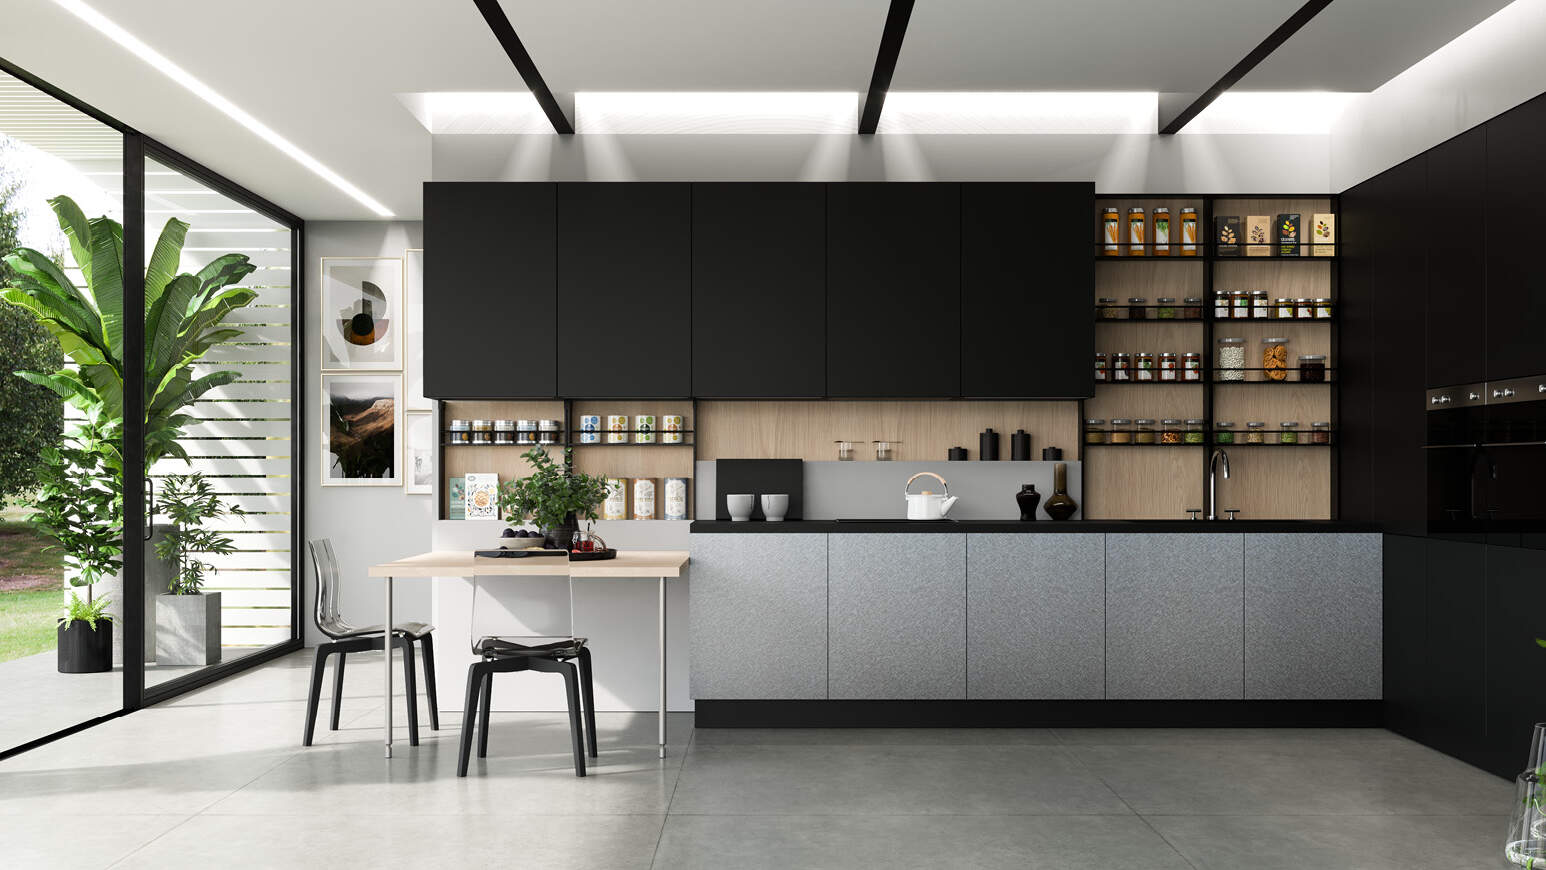 centro kitchen κουζίνα, design, μοντέρνα κουζίνα, glaze, σκούρα γκρι χρώμα, κρεμαστά και υψηλά ντουλάπια, τραπέζι στο χρώμα του ξύλου, εντοιχισμένος φούρνος